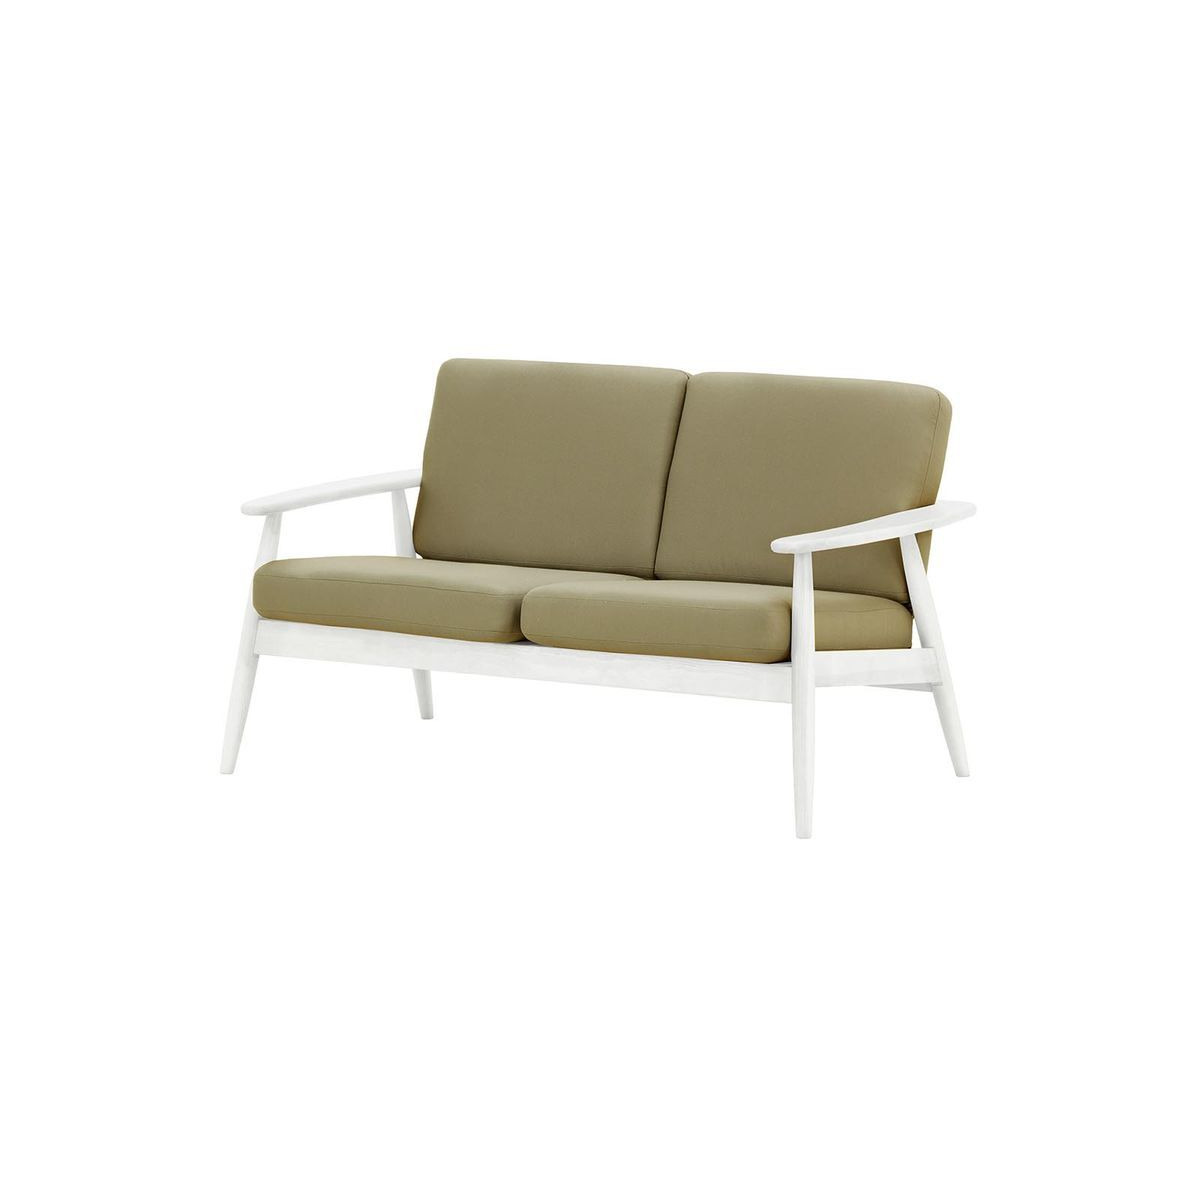 Demure Aqua 2 Seater Garden Sofa, beige, Leg colour: 8035 white - image 1